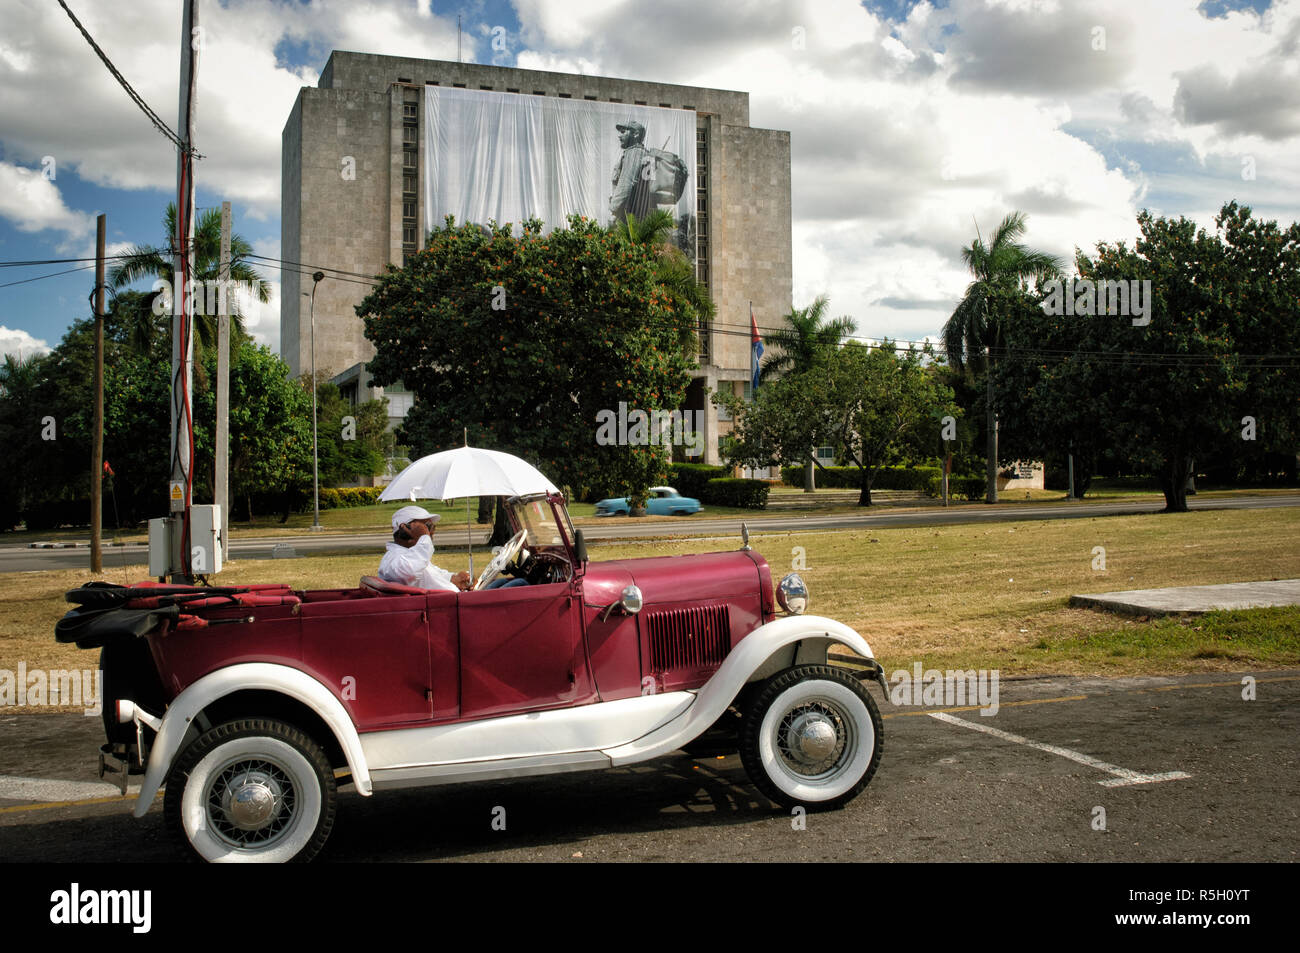 Cuban taxi at the Plaza de la Revolución, days after Fidel Catstro's death. 4 December 2016 Stock Photo